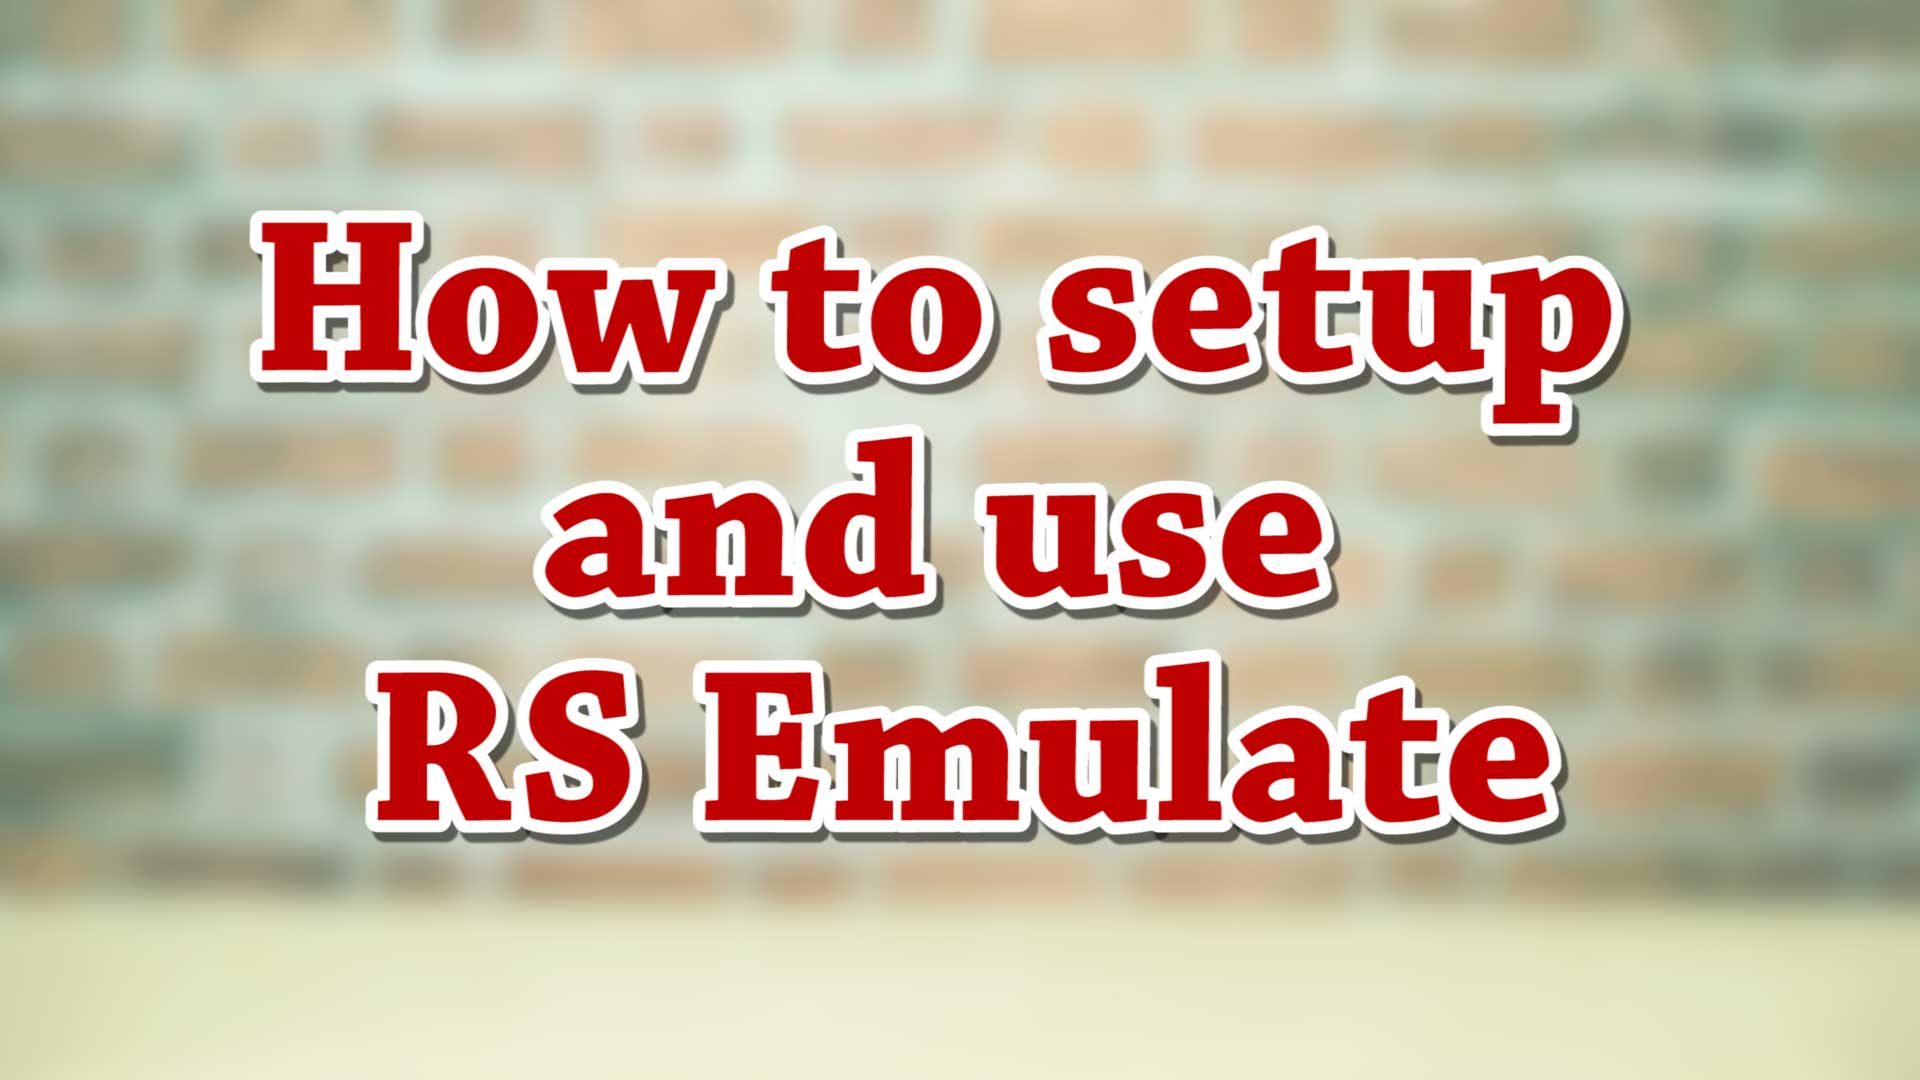 RSEmulate - How to Setup and Use (M2E40)